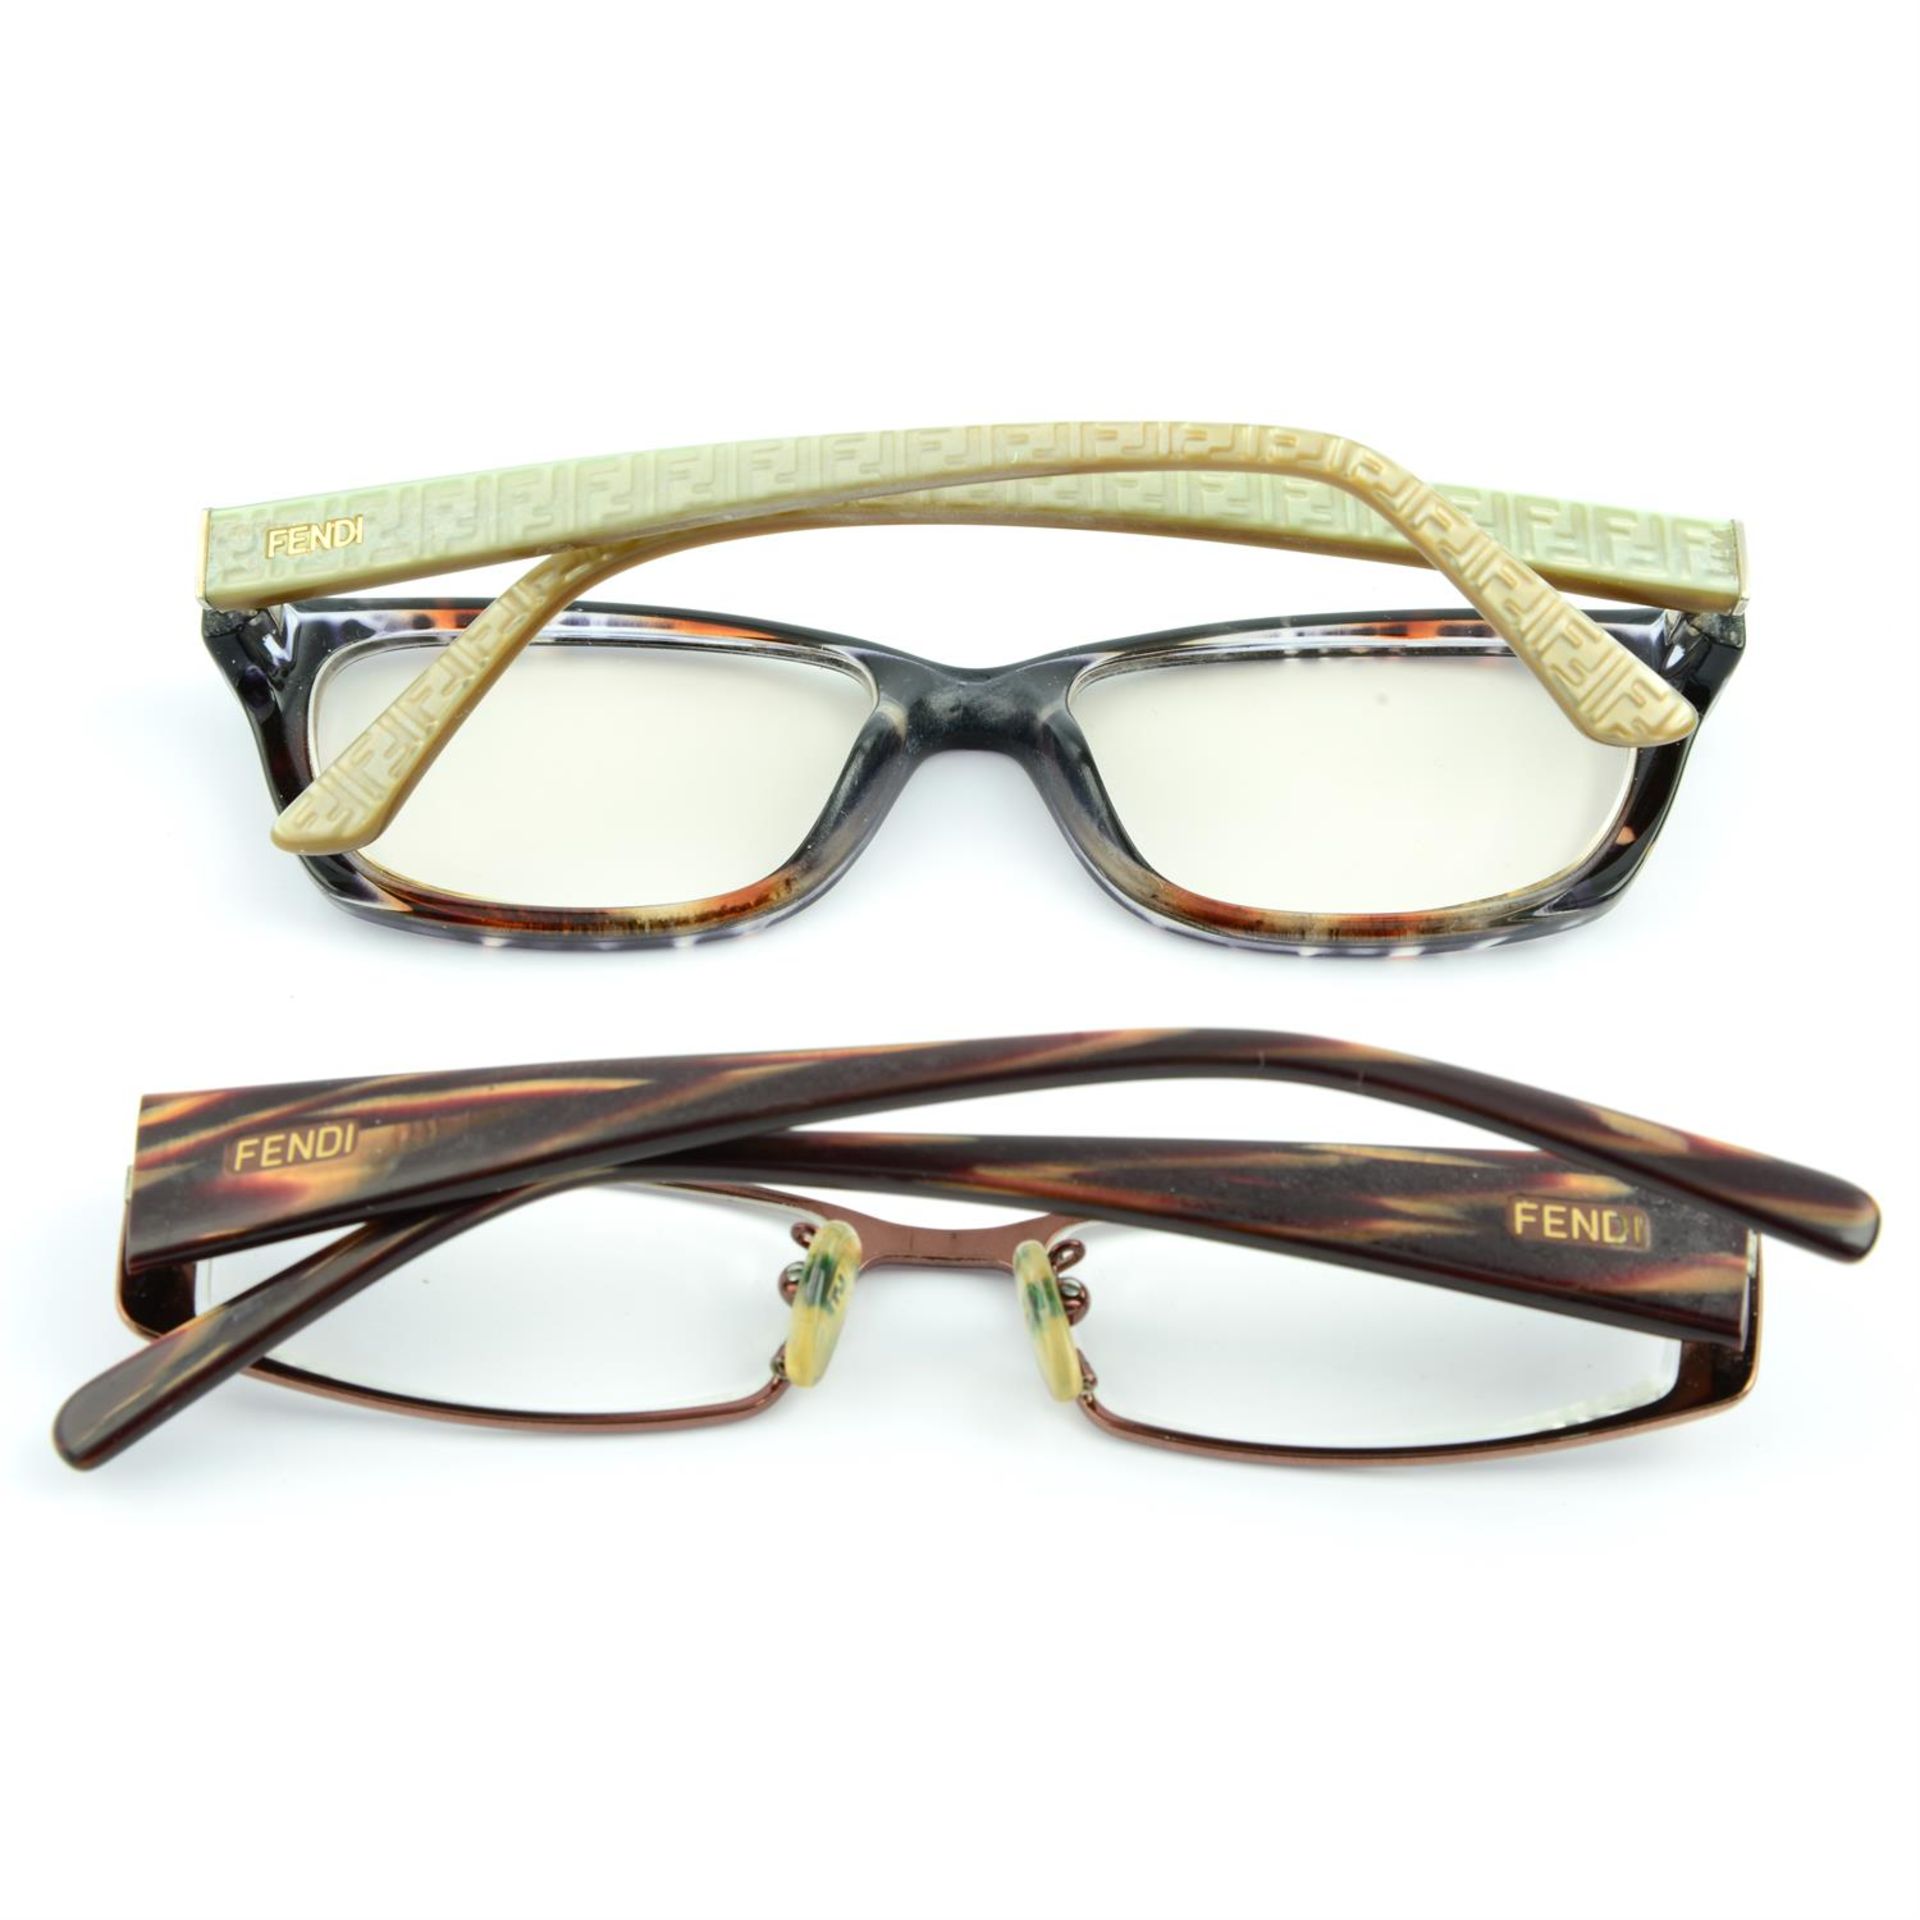 FENDI - two pairs of prescription glasses - Image 2 of 3